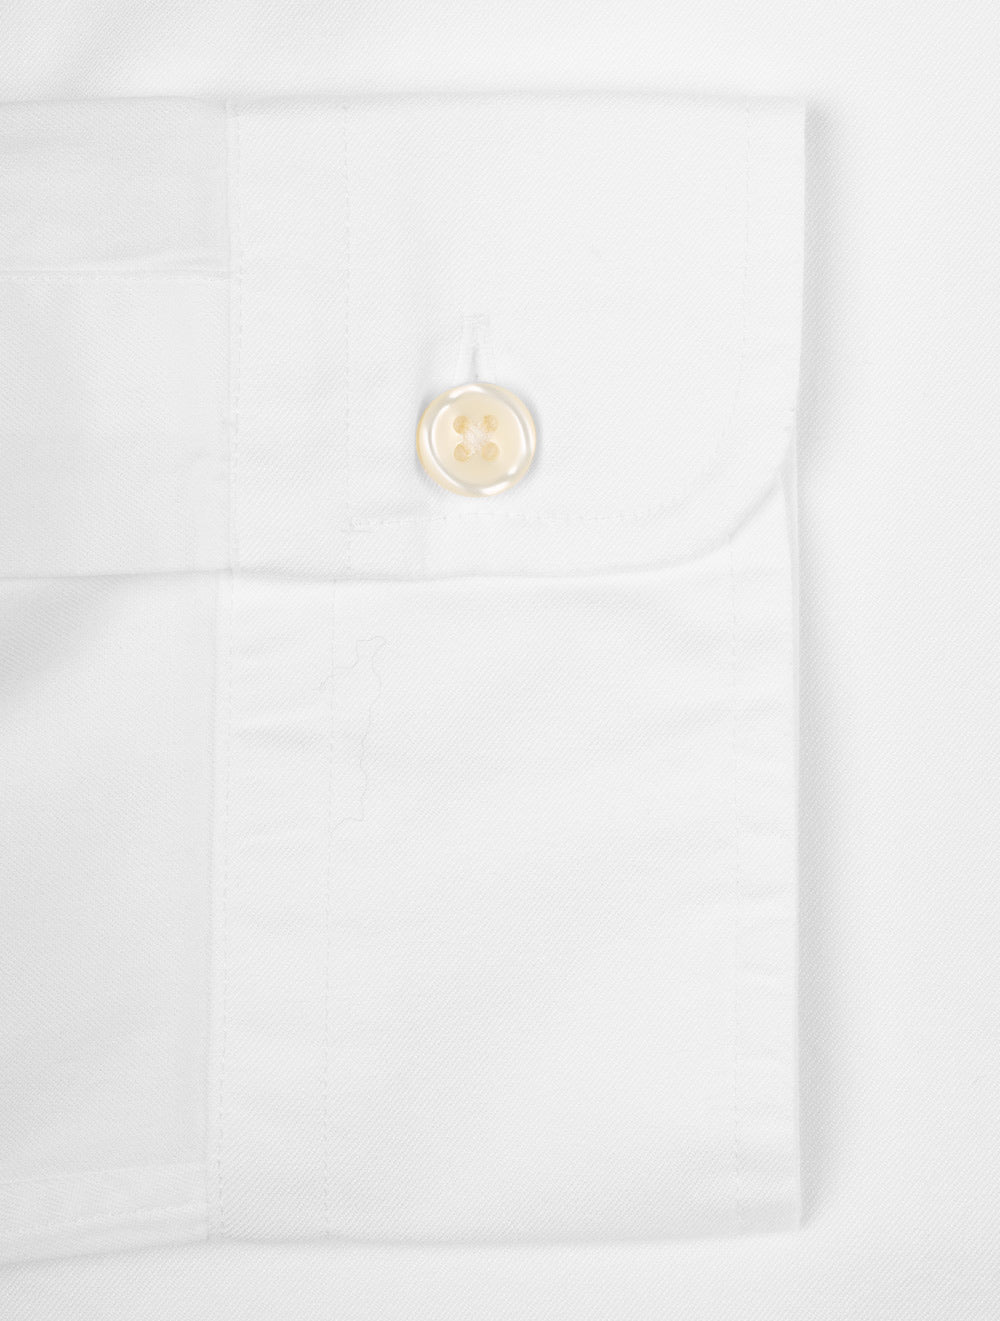 Buttondown Long Sleeve Twill Shirt Off White